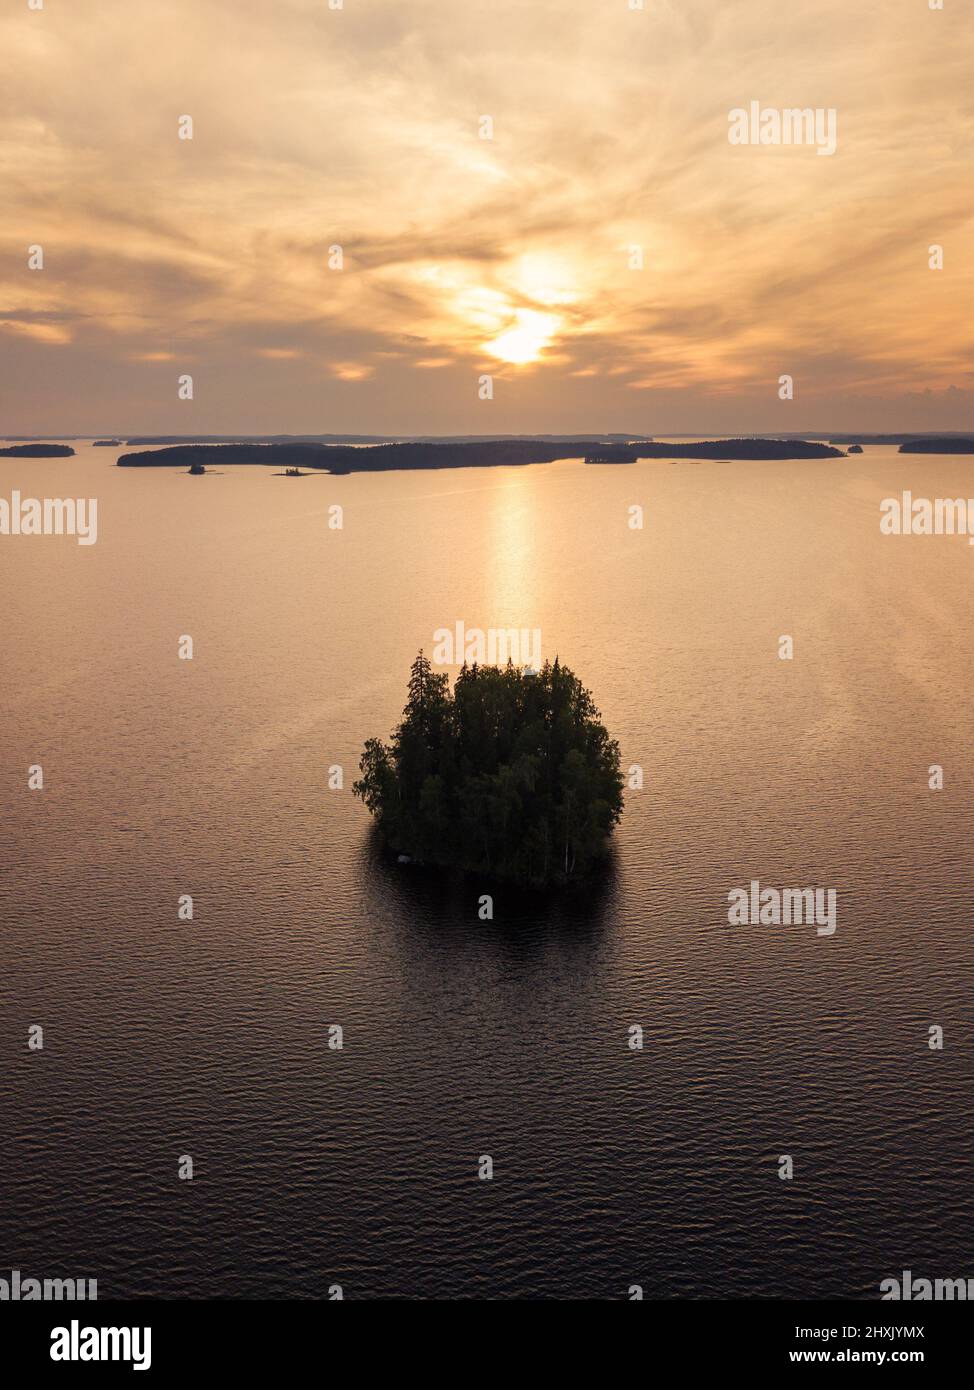 Island in lake landscape with beautiful sunset Stock Photo